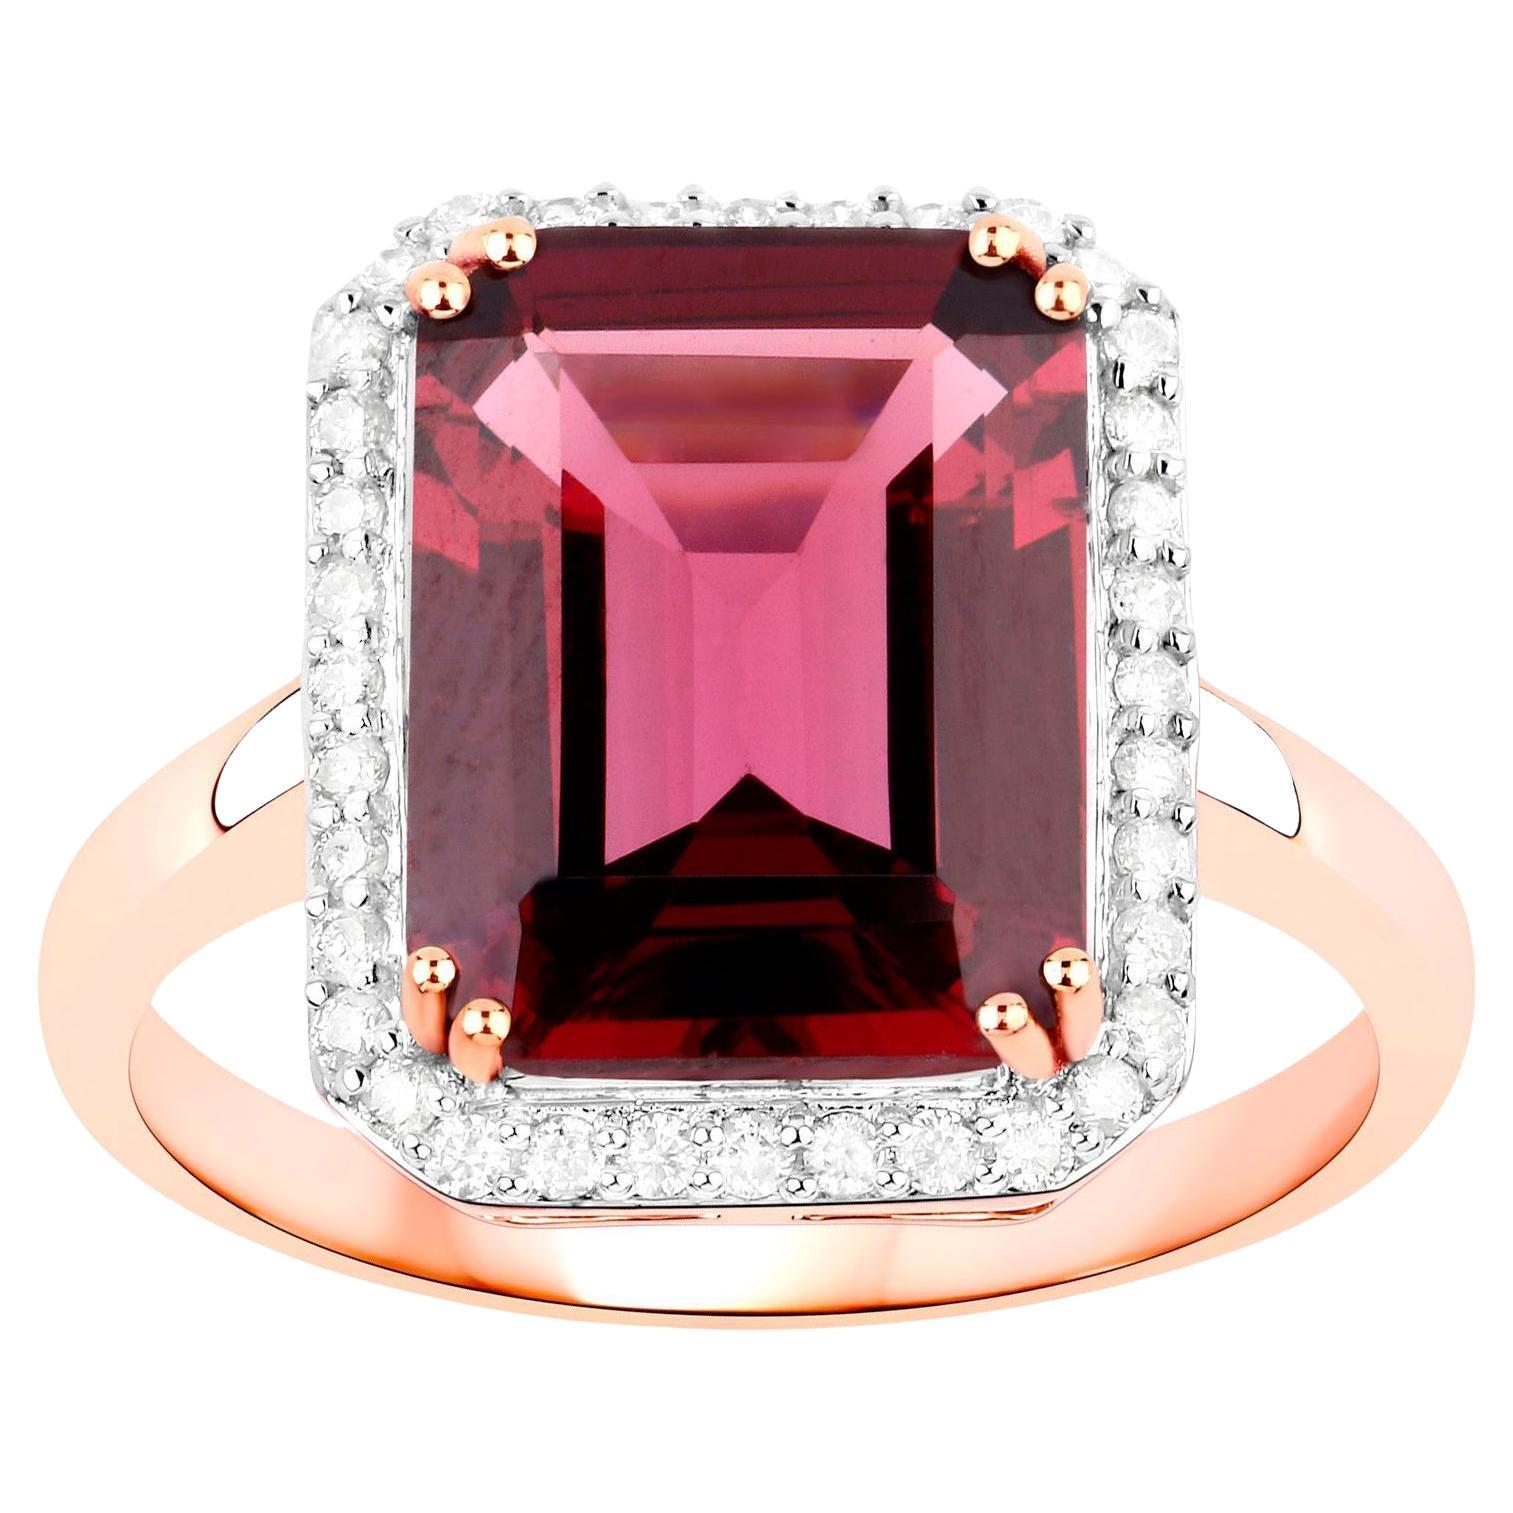 Rhodolite Garnet Ring With Diamonds 5.97 Carats 14K Rose Gold